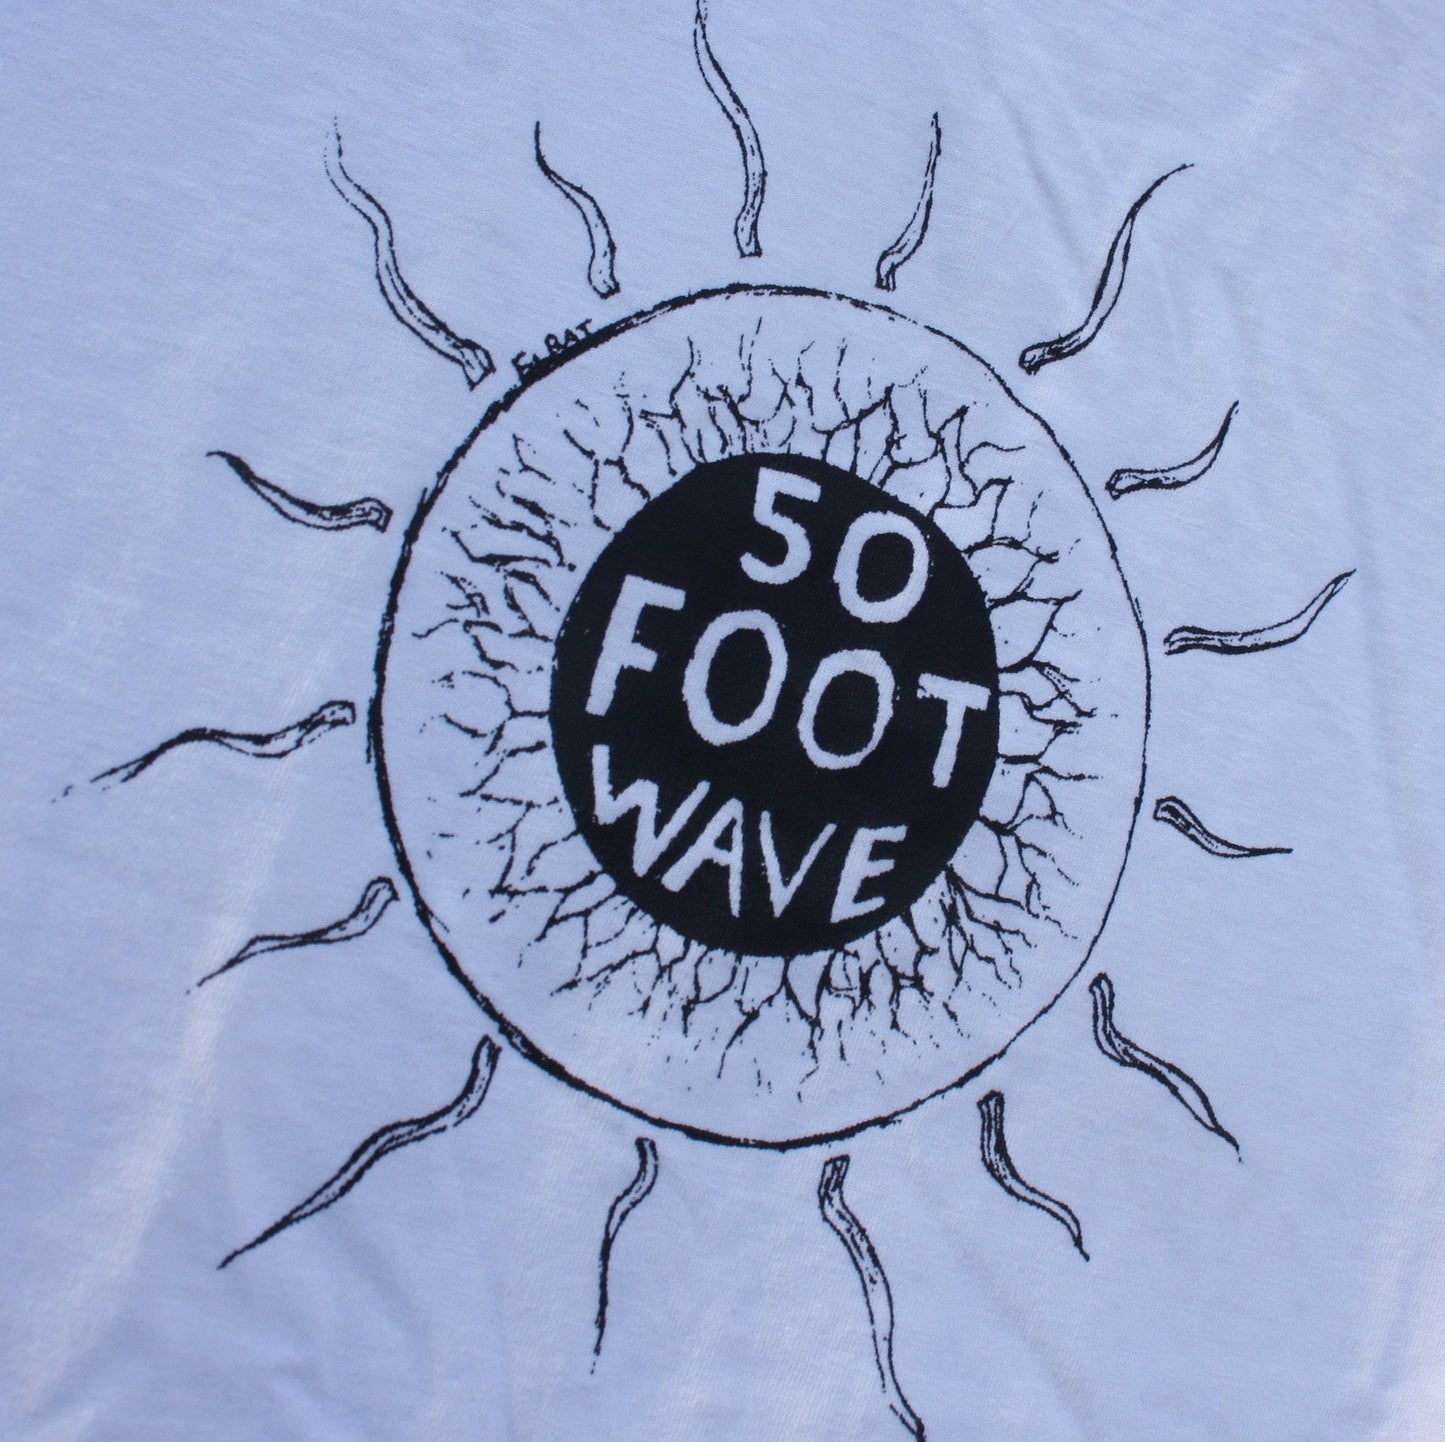 50 Foot Wave 'Staring into the Sun' tee - White T-Shirt with Black print - ElRat/Hersh - ElRatDesigns - T Shirt